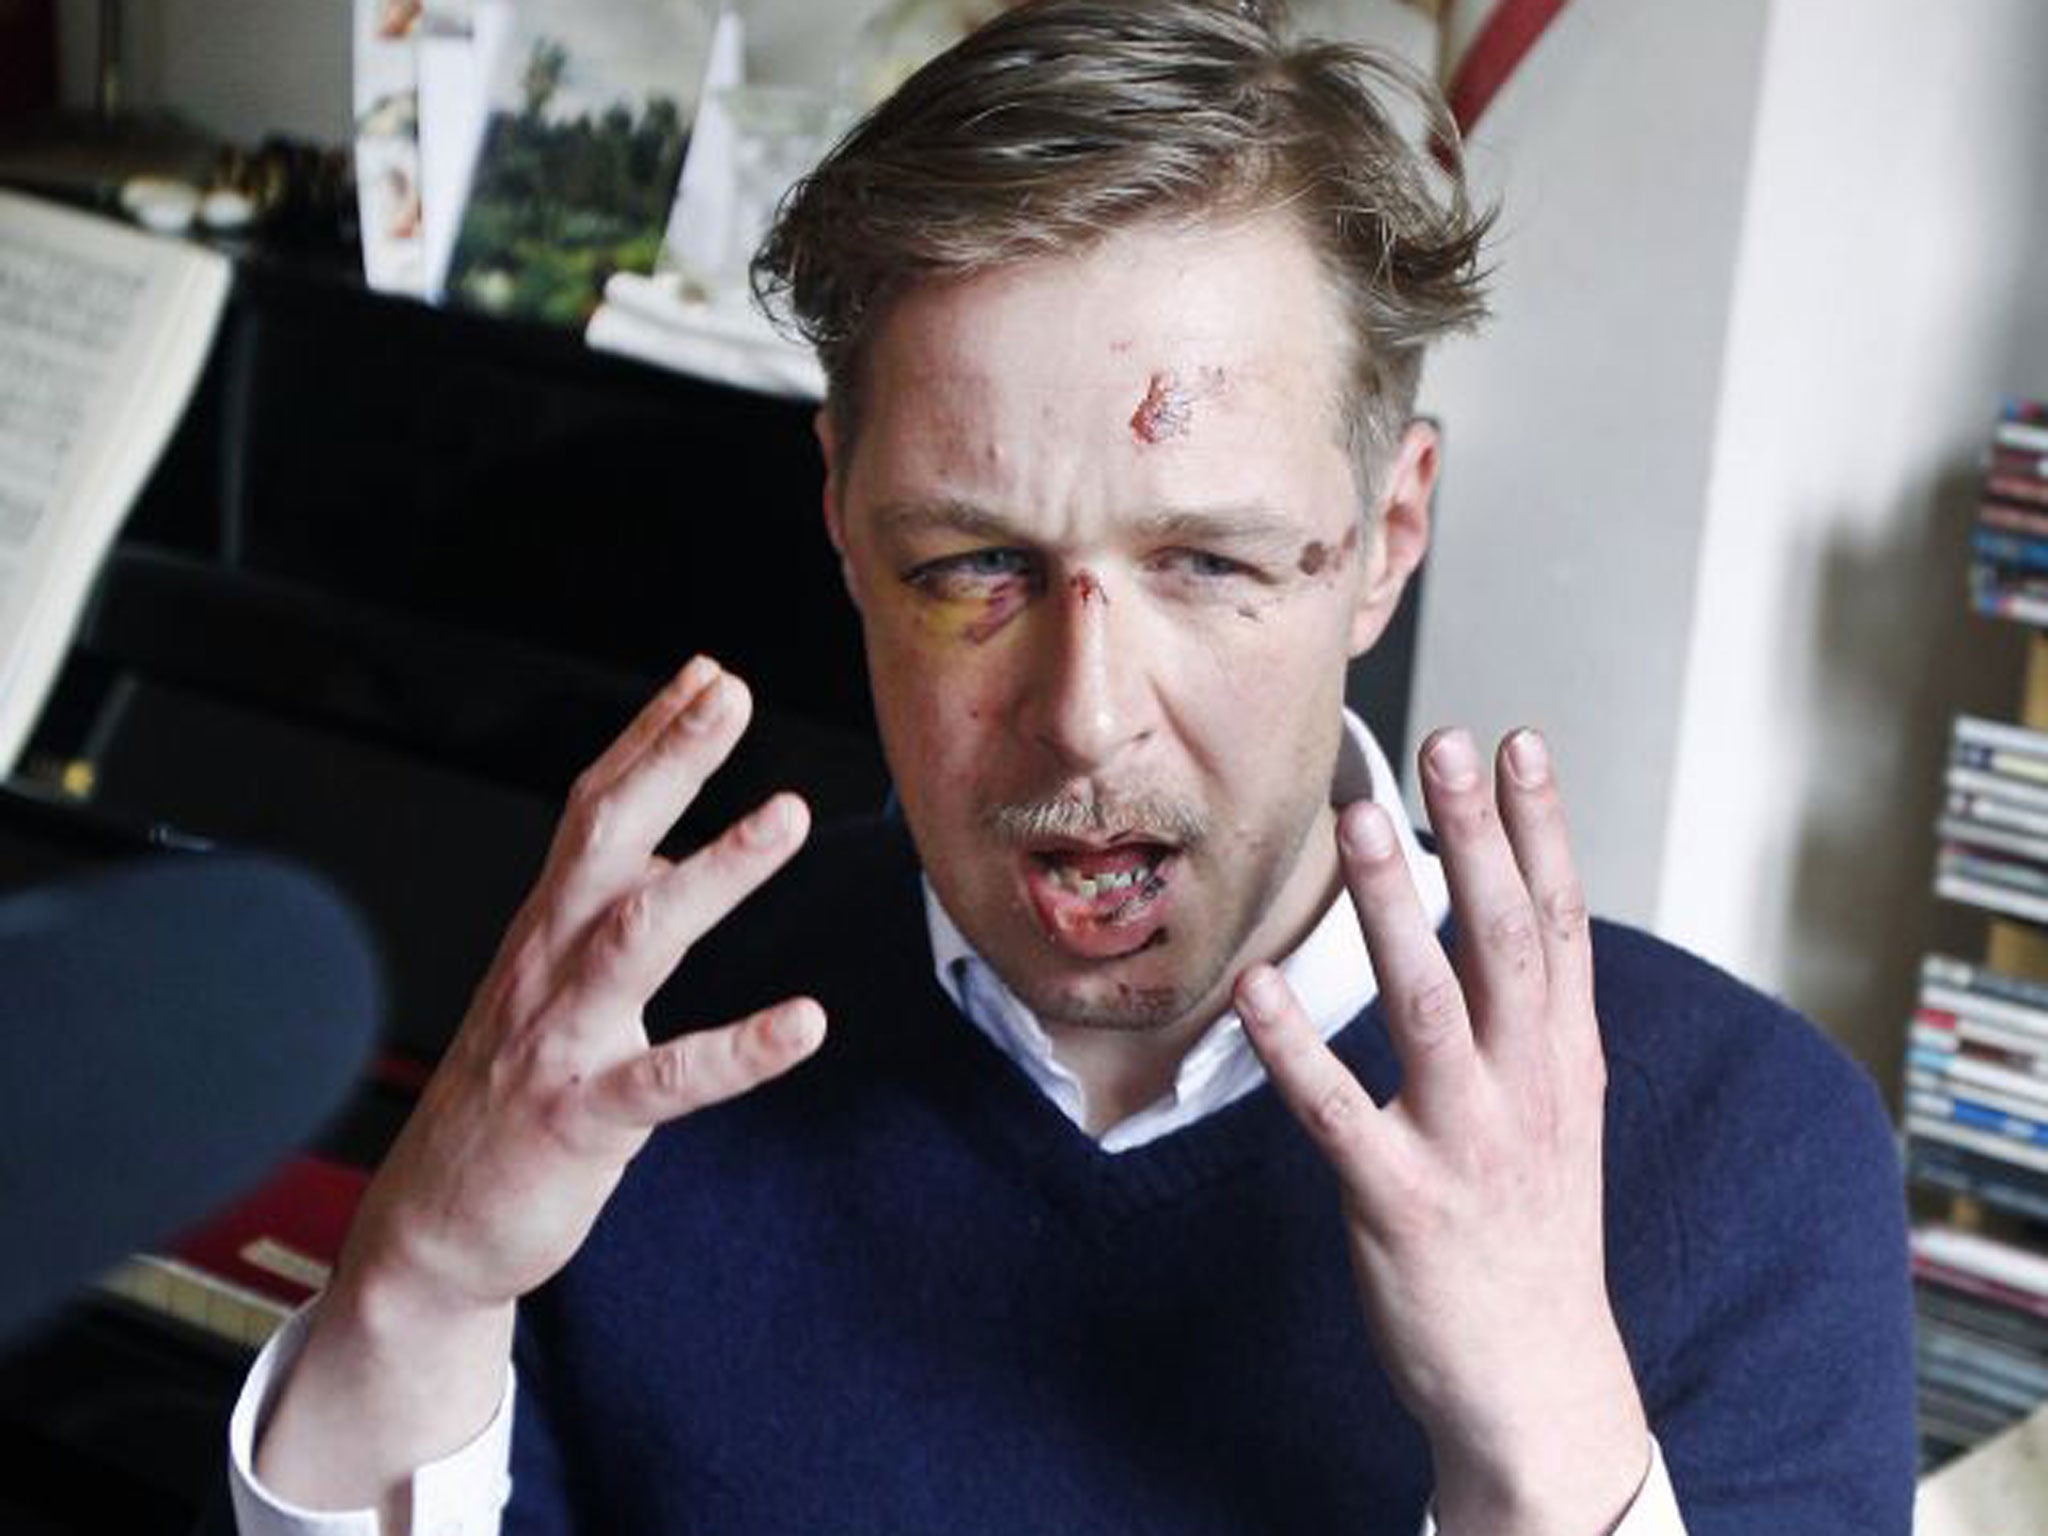 An image of Wilfred de Bruijn’s battered face has gone viral